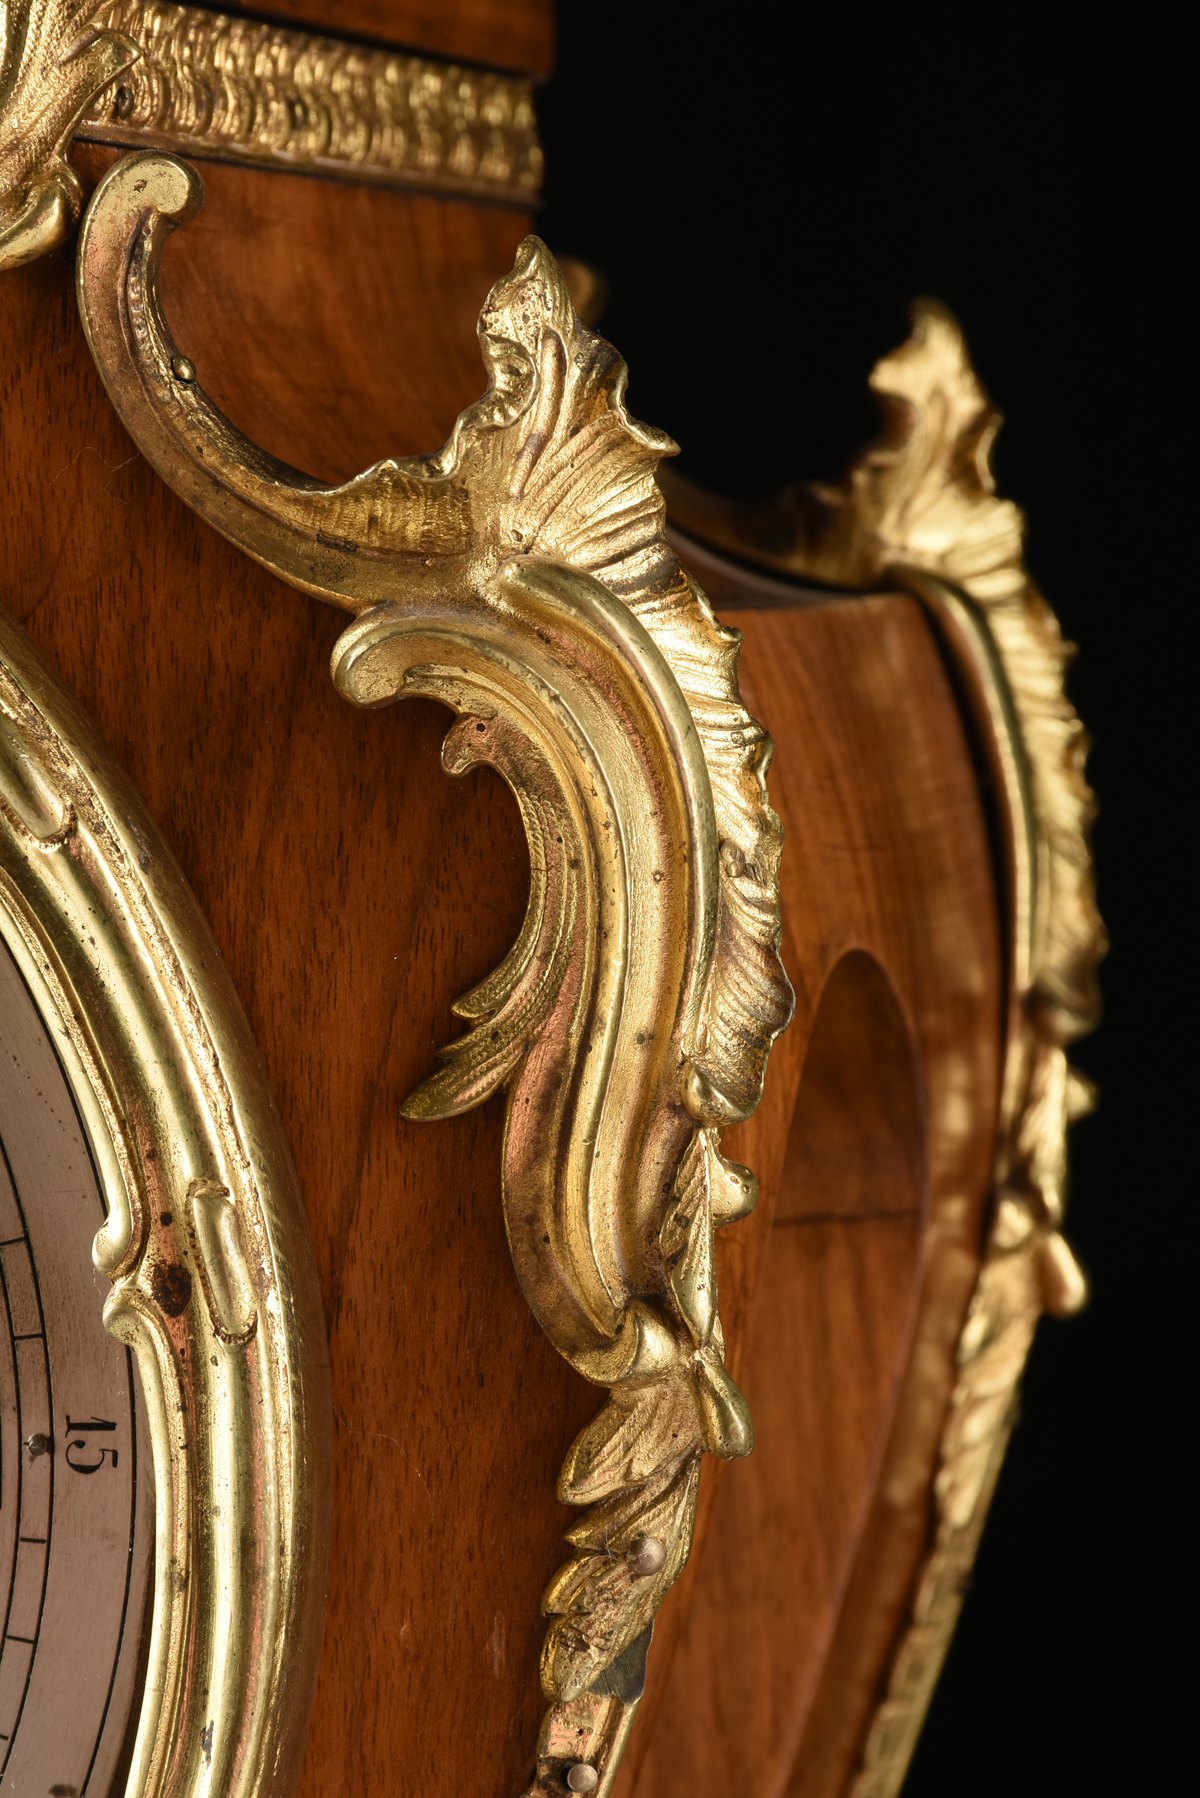 A LOUIS XV STYLE ORMOLU MOUNTED KINGWOOD BRACKET CLOCK, LATE 19TH CENTURY, the tÃªte de poupÃ©e body - Image 7 of 11